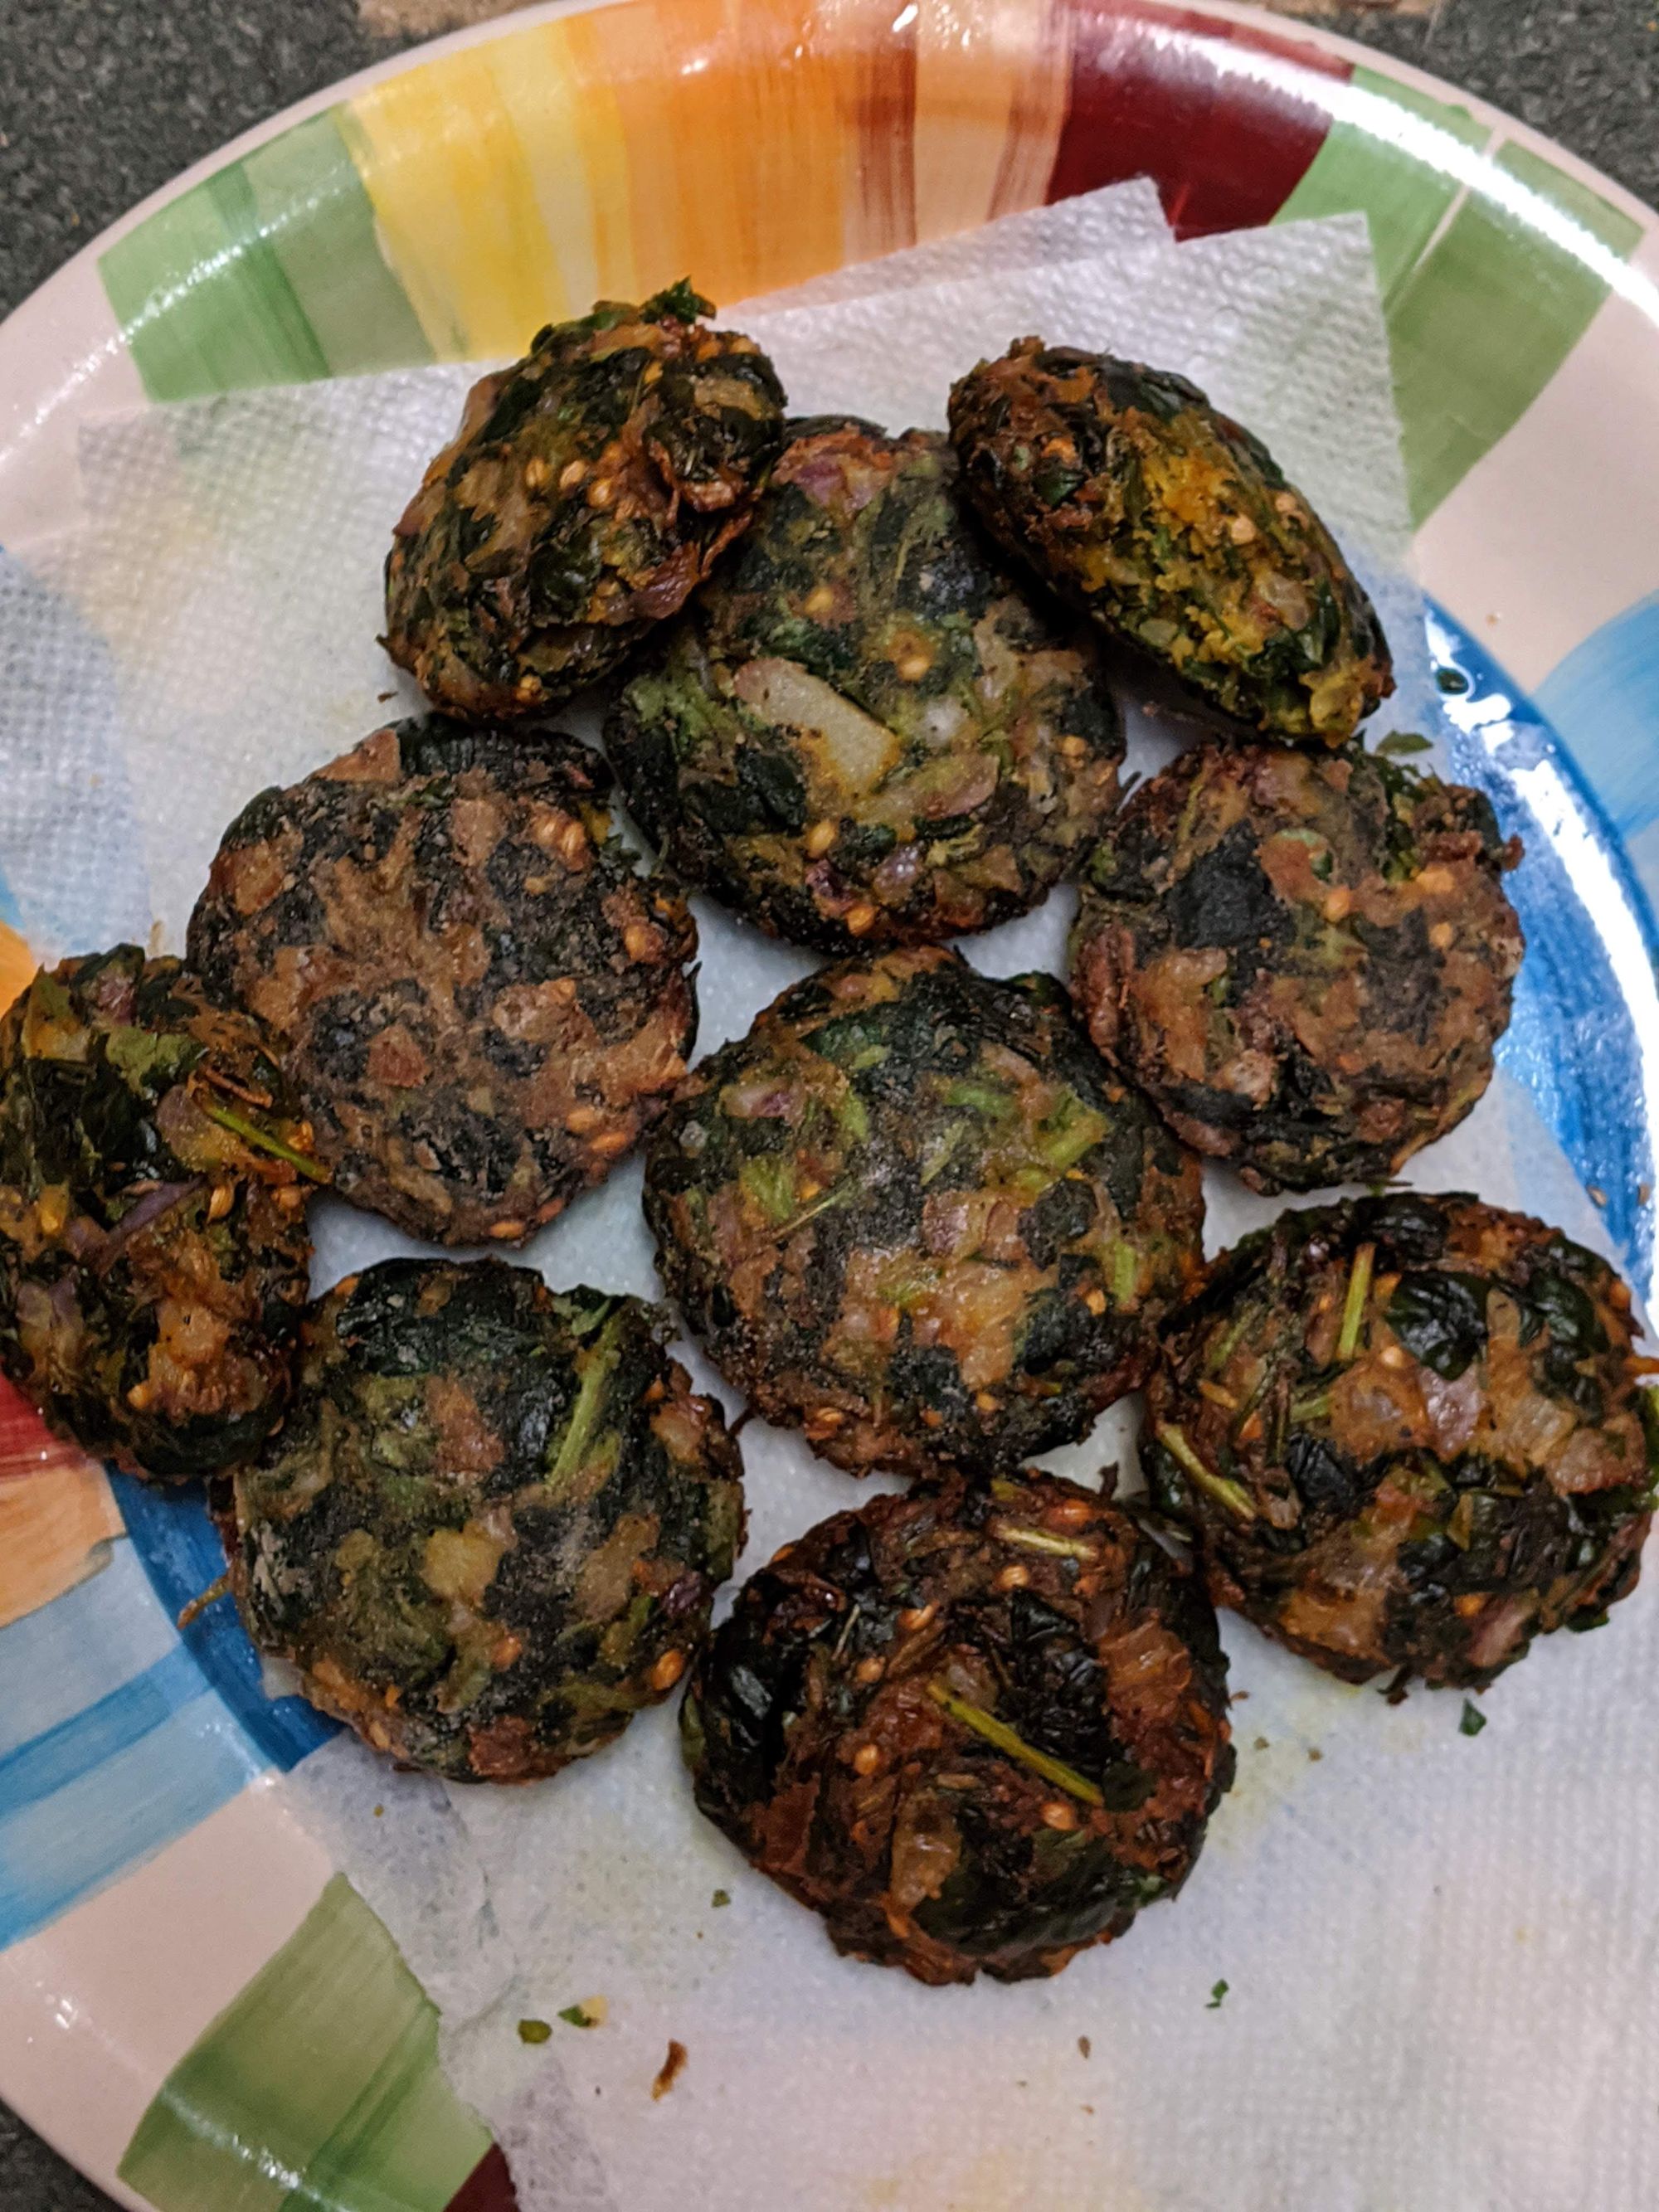 Making a Methi Vadi (A snack made of Fenugreek Leaves)